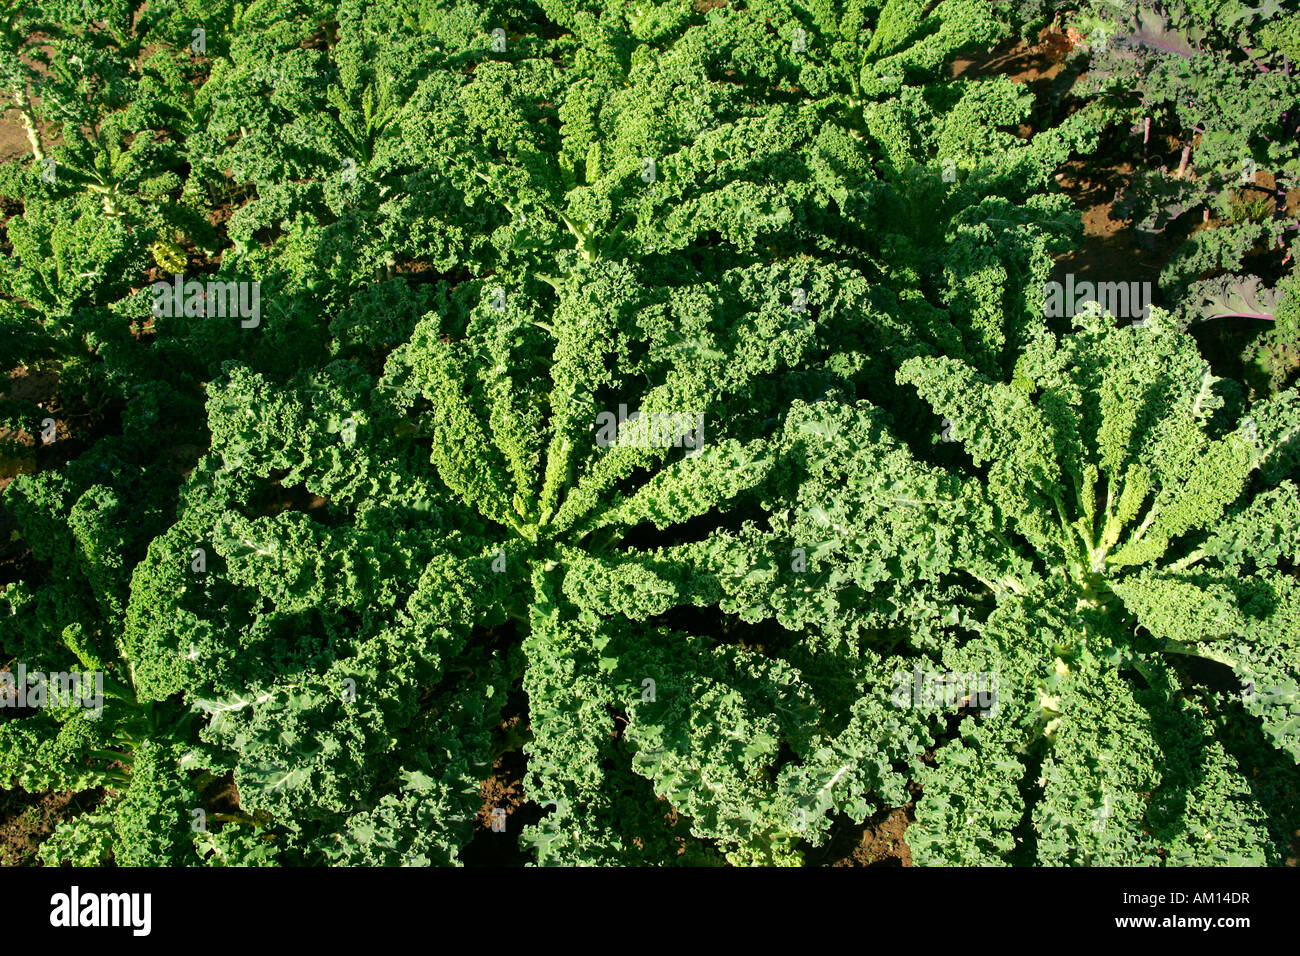 Green kale - borecole - cabbage - vegetable (Brassica oleracea var. sabellica) Stock Photo